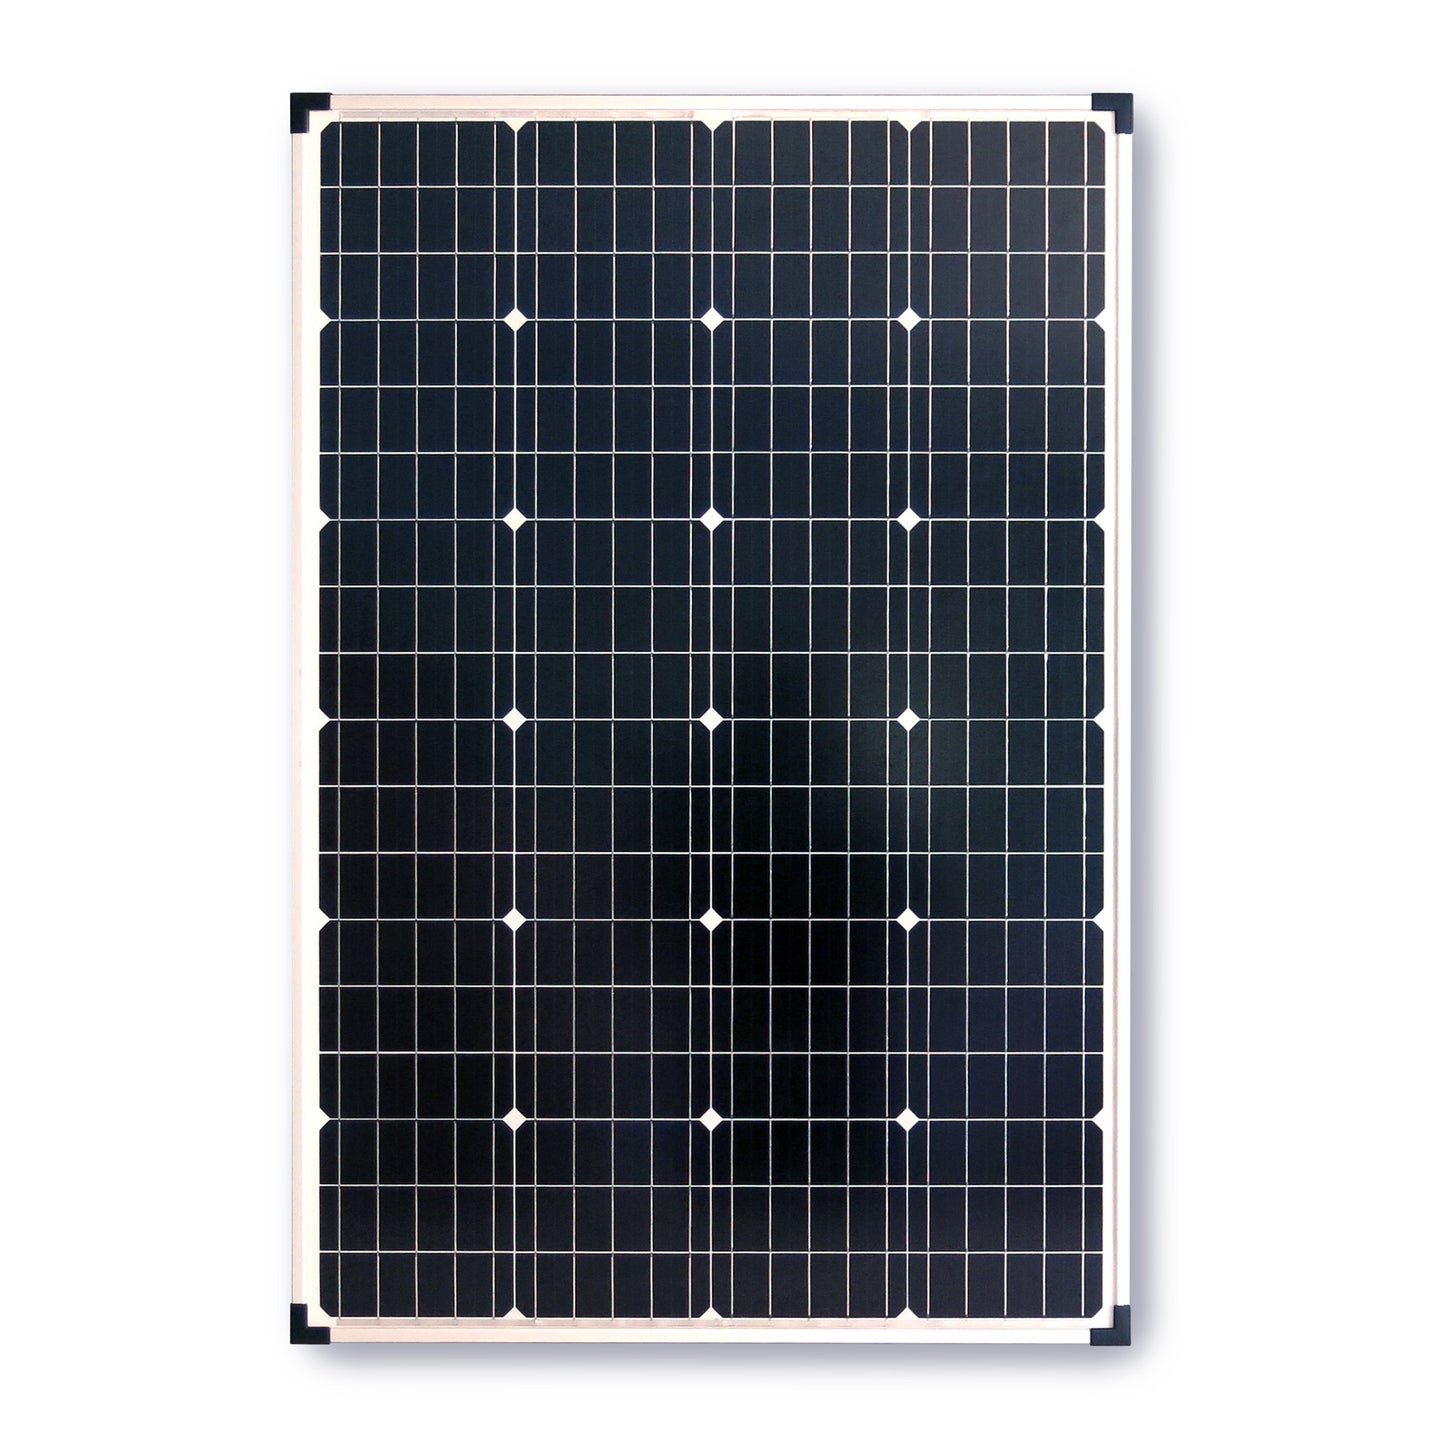 110 Watt Crystalline Solar Panel   (Refurbished)